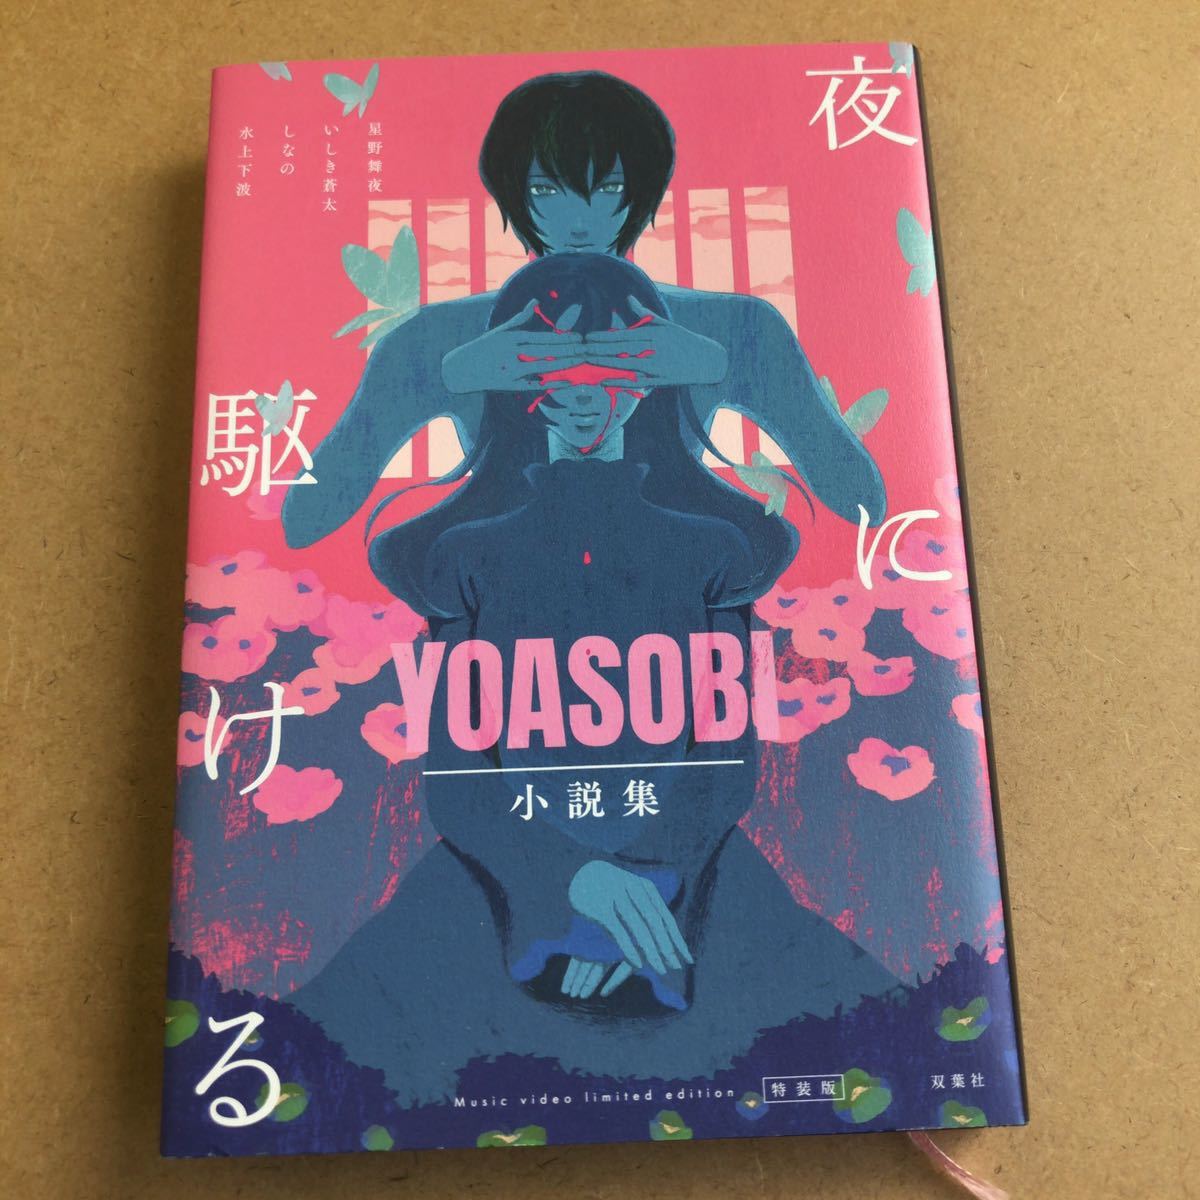 Yoasobi小説 夜に駆ける 特装版 264 小説一般 売買されたオークション情報 Yahooの商品情報をアーカイブ公開 オークファン Aucfan Com